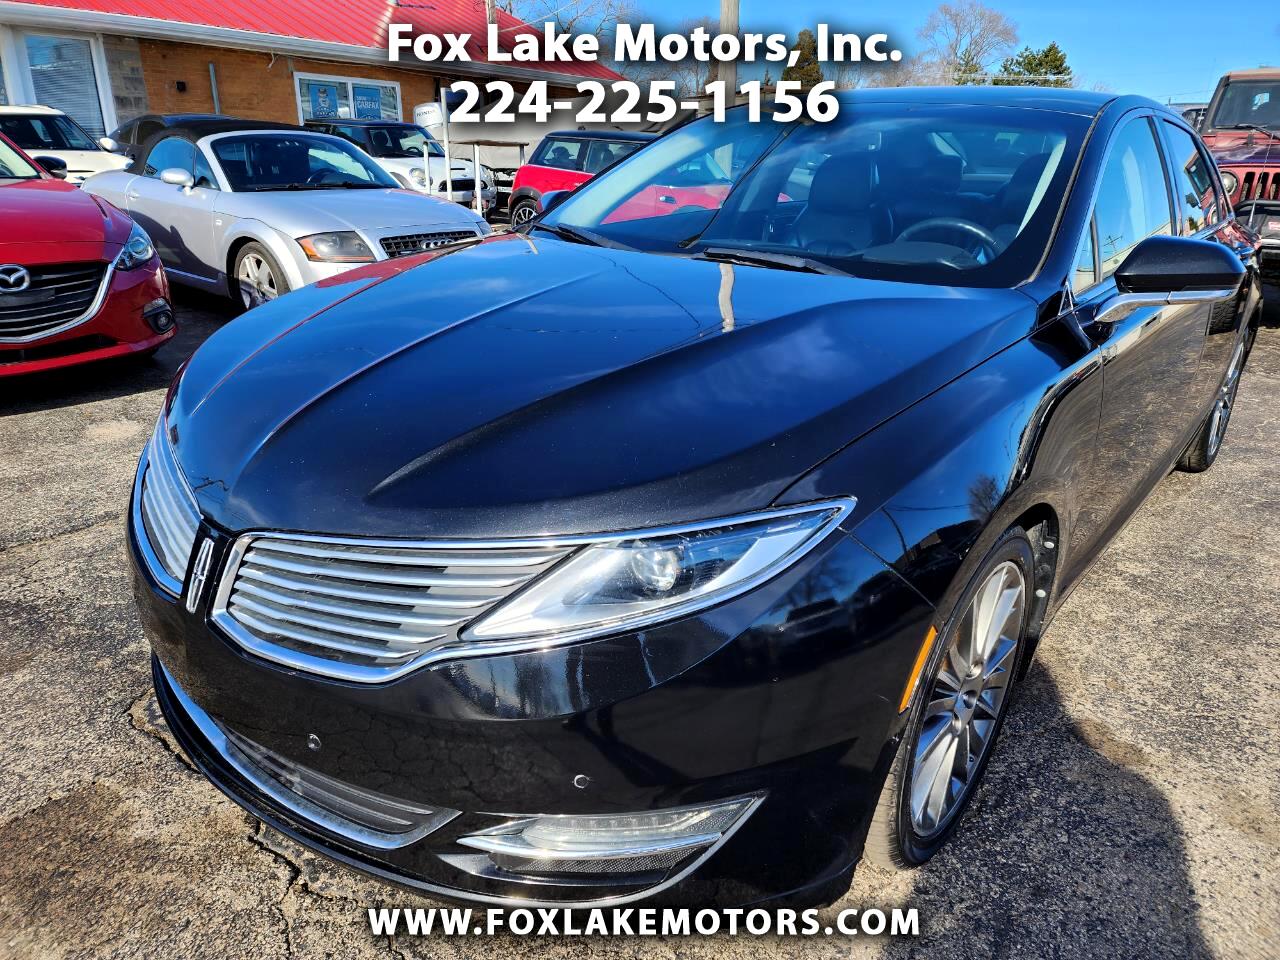 Used 2014 Lincoln MKZ Hybrid Premier for Sale in Fox Lake IL 60020 Fox Lake  Motors, Inc.